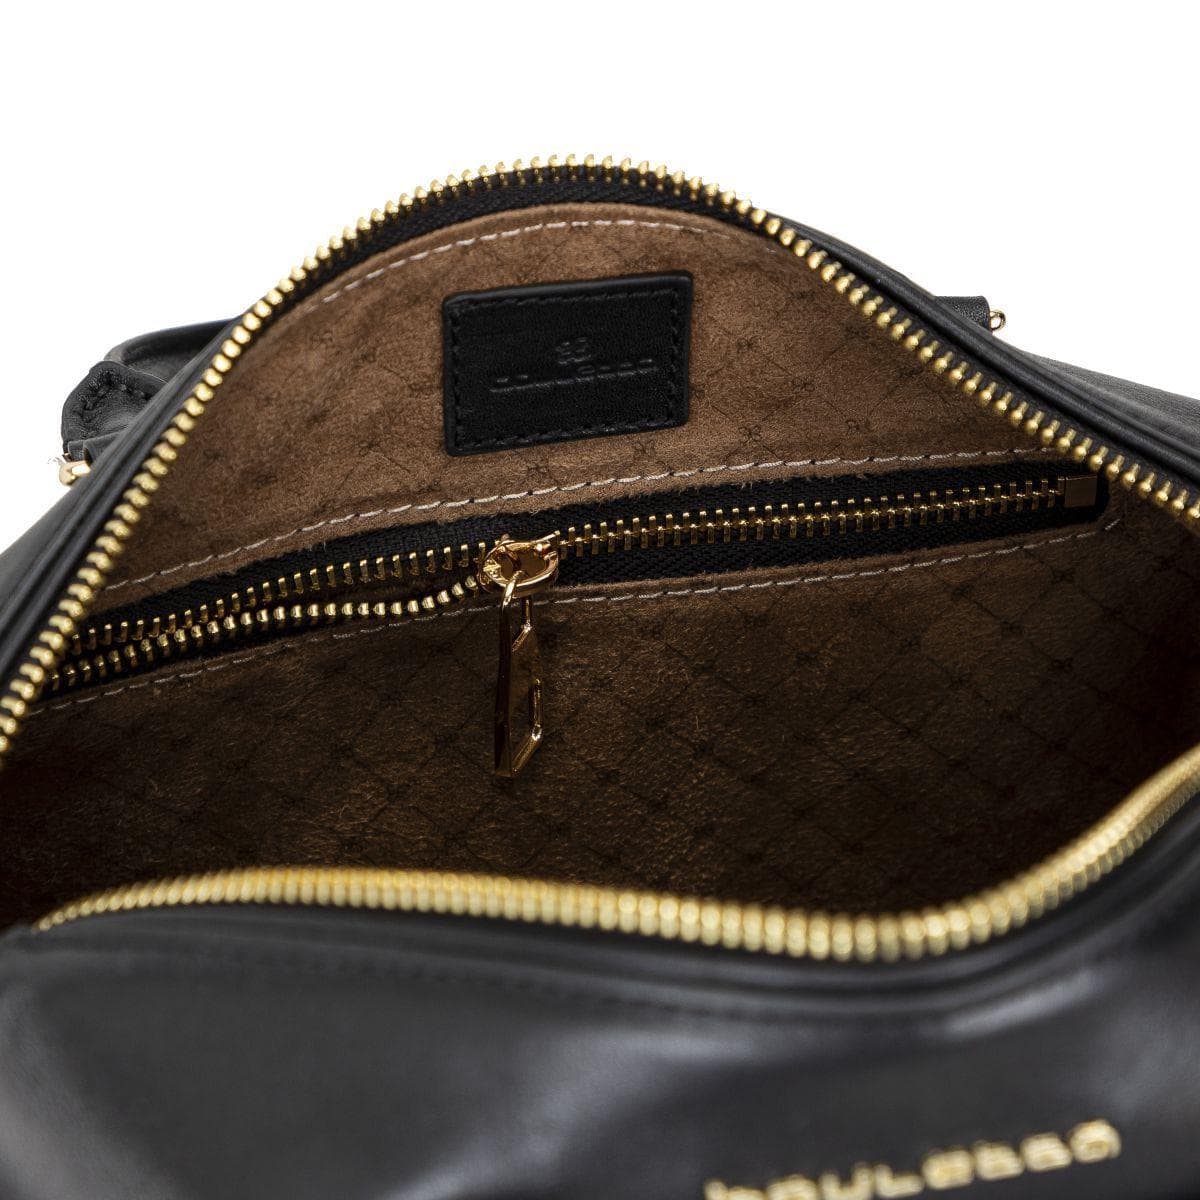 Shine Women's Leather Handbags Bouletta Shop